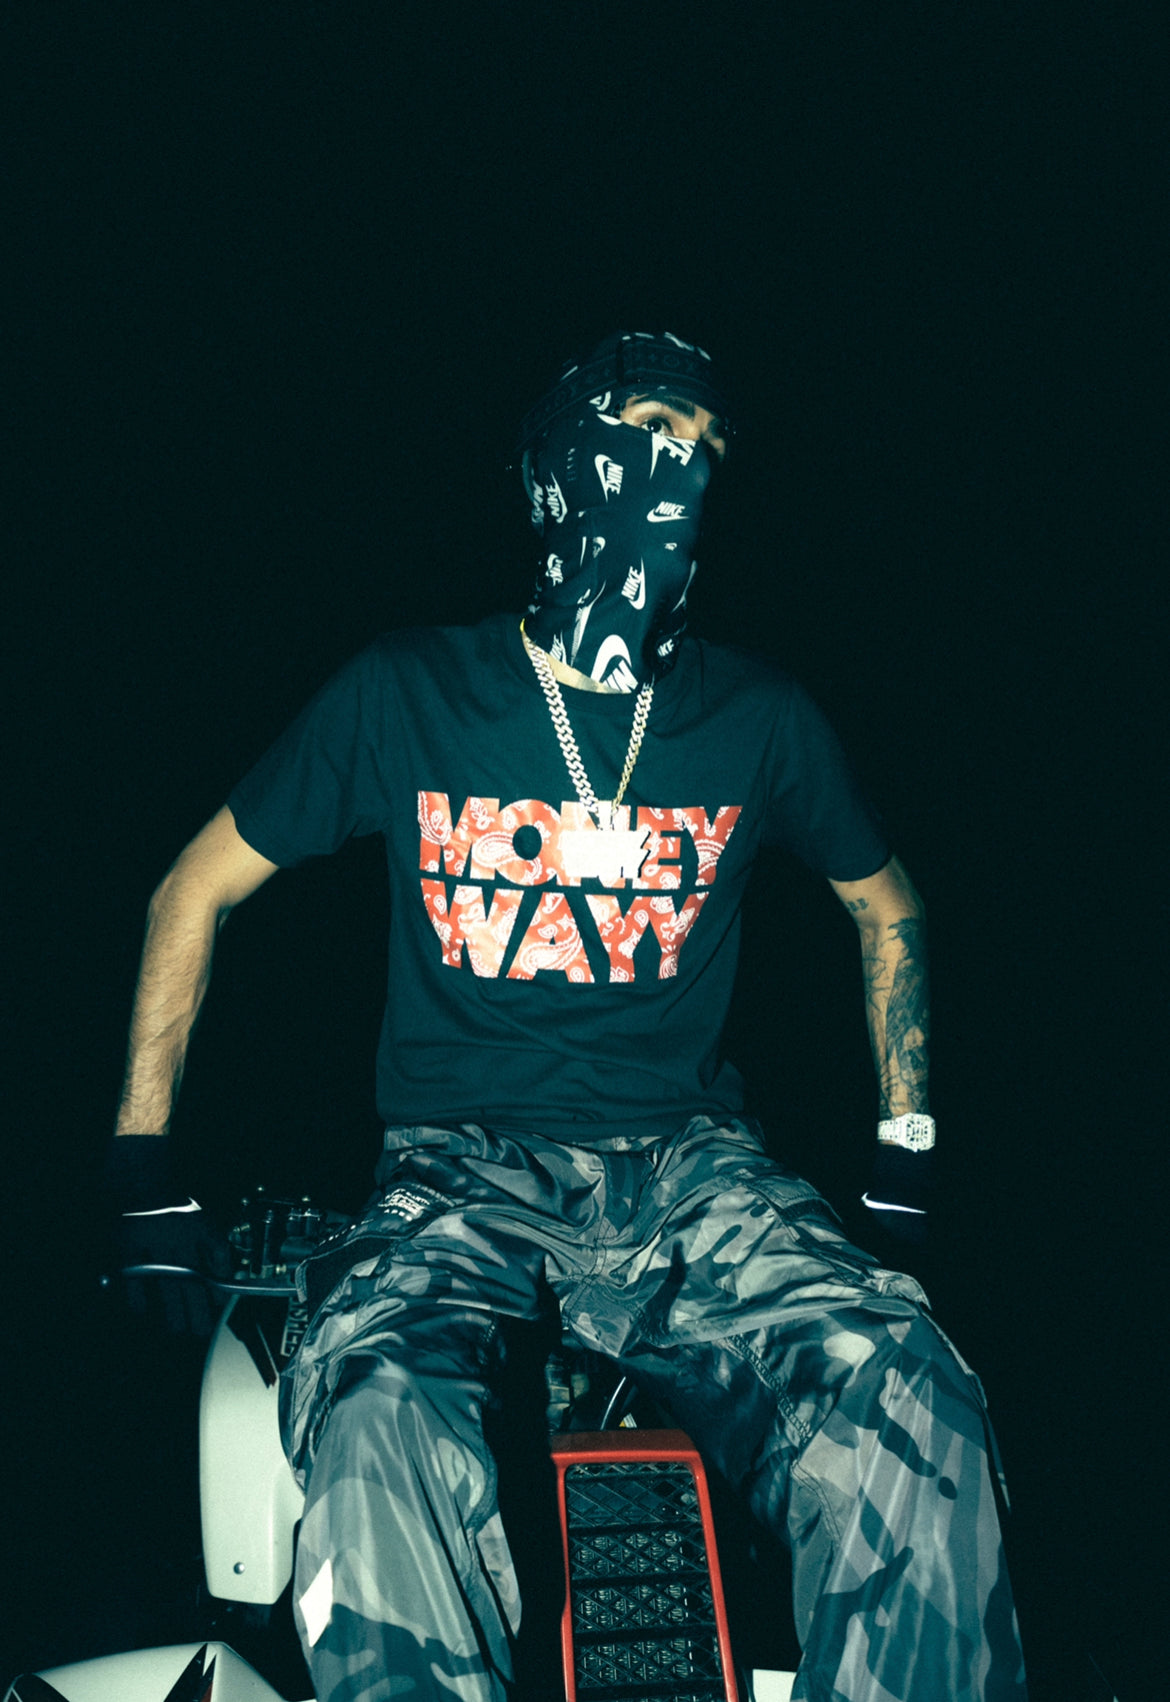 “MONEY WAYY” BLACK T